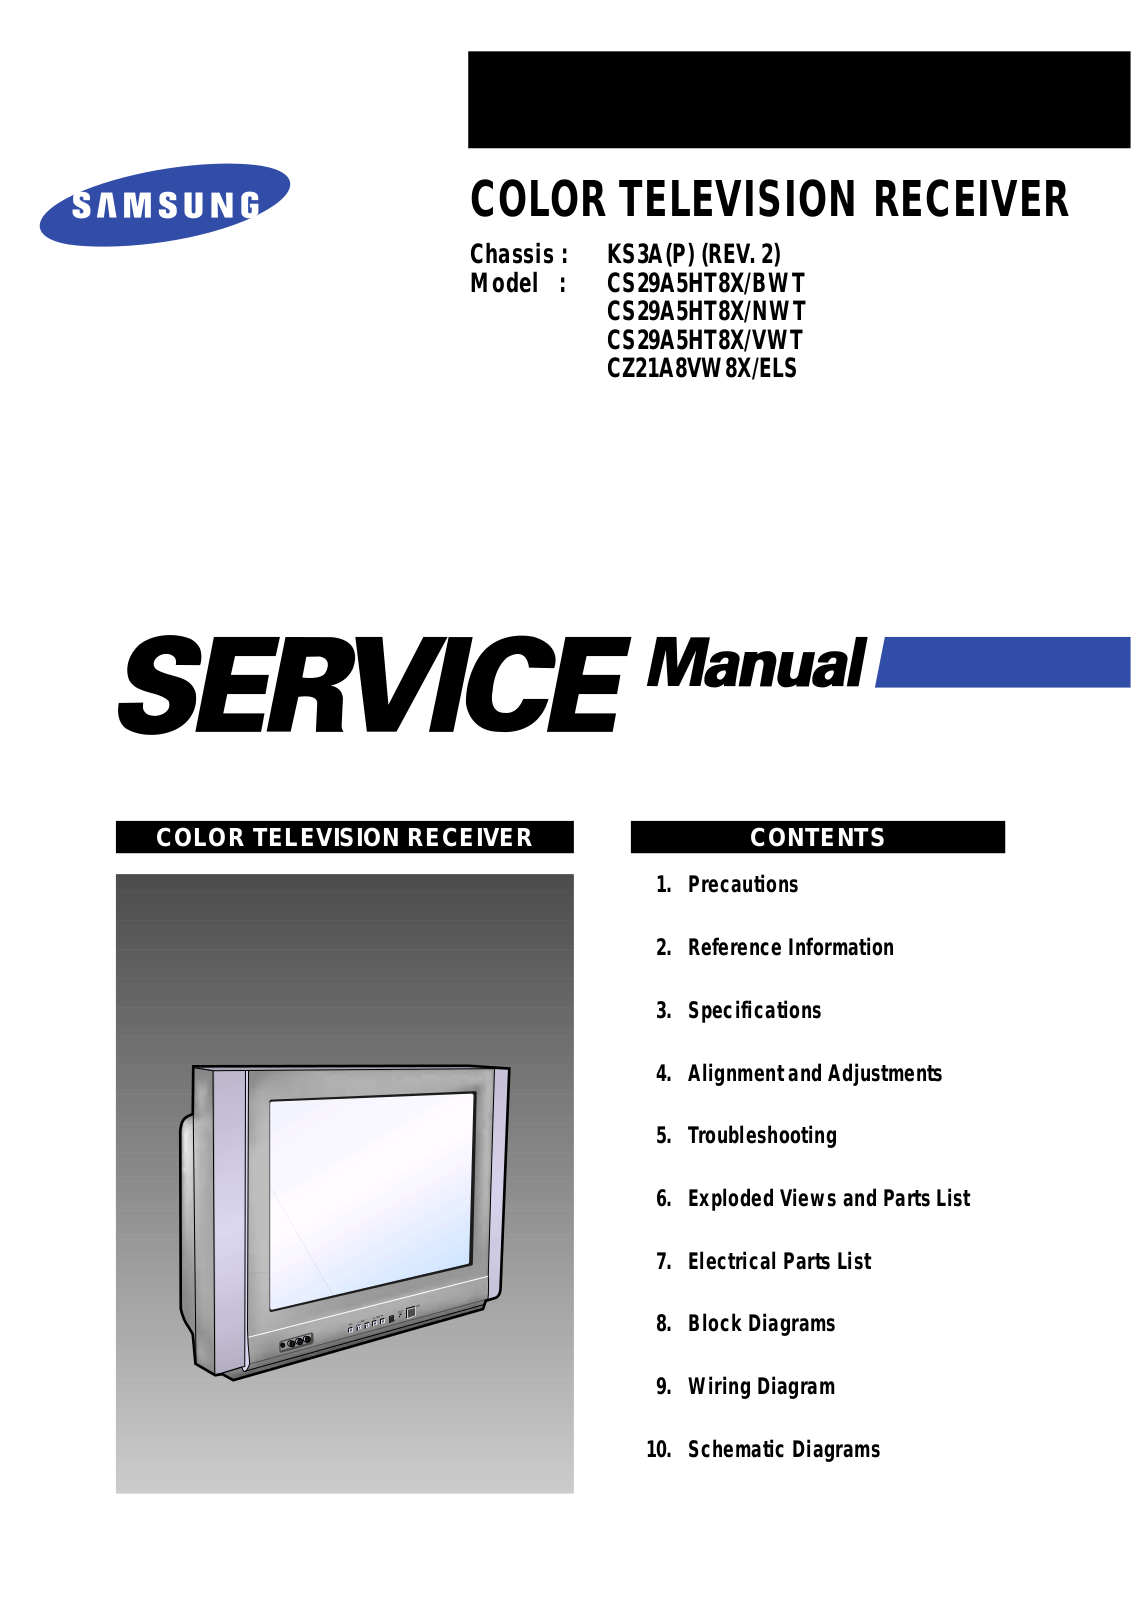 SAMSUNG CS-29 Service Manual